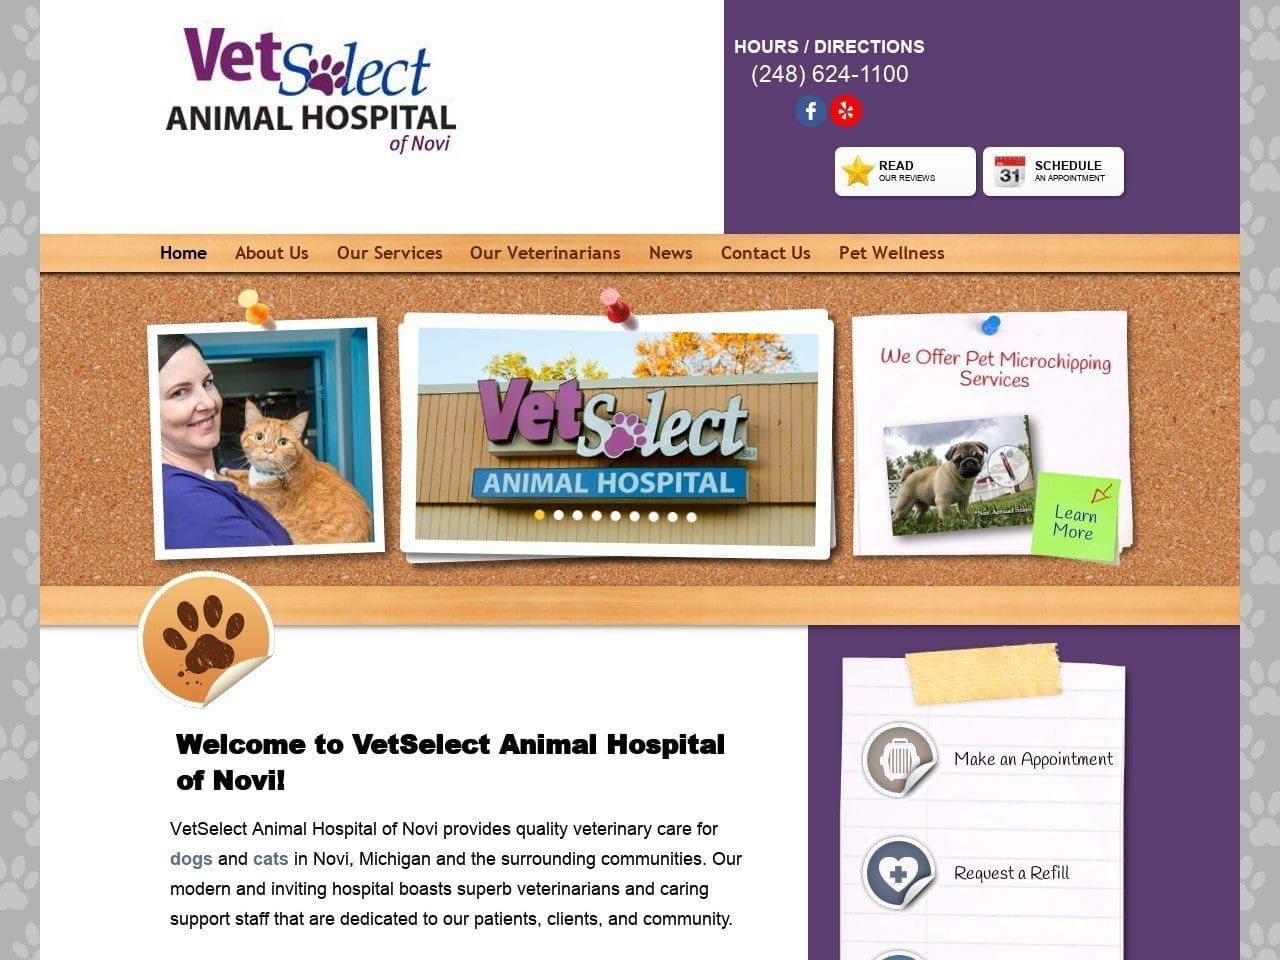 Vet Select Animal Hospital Website Screenshot from vetselect.com